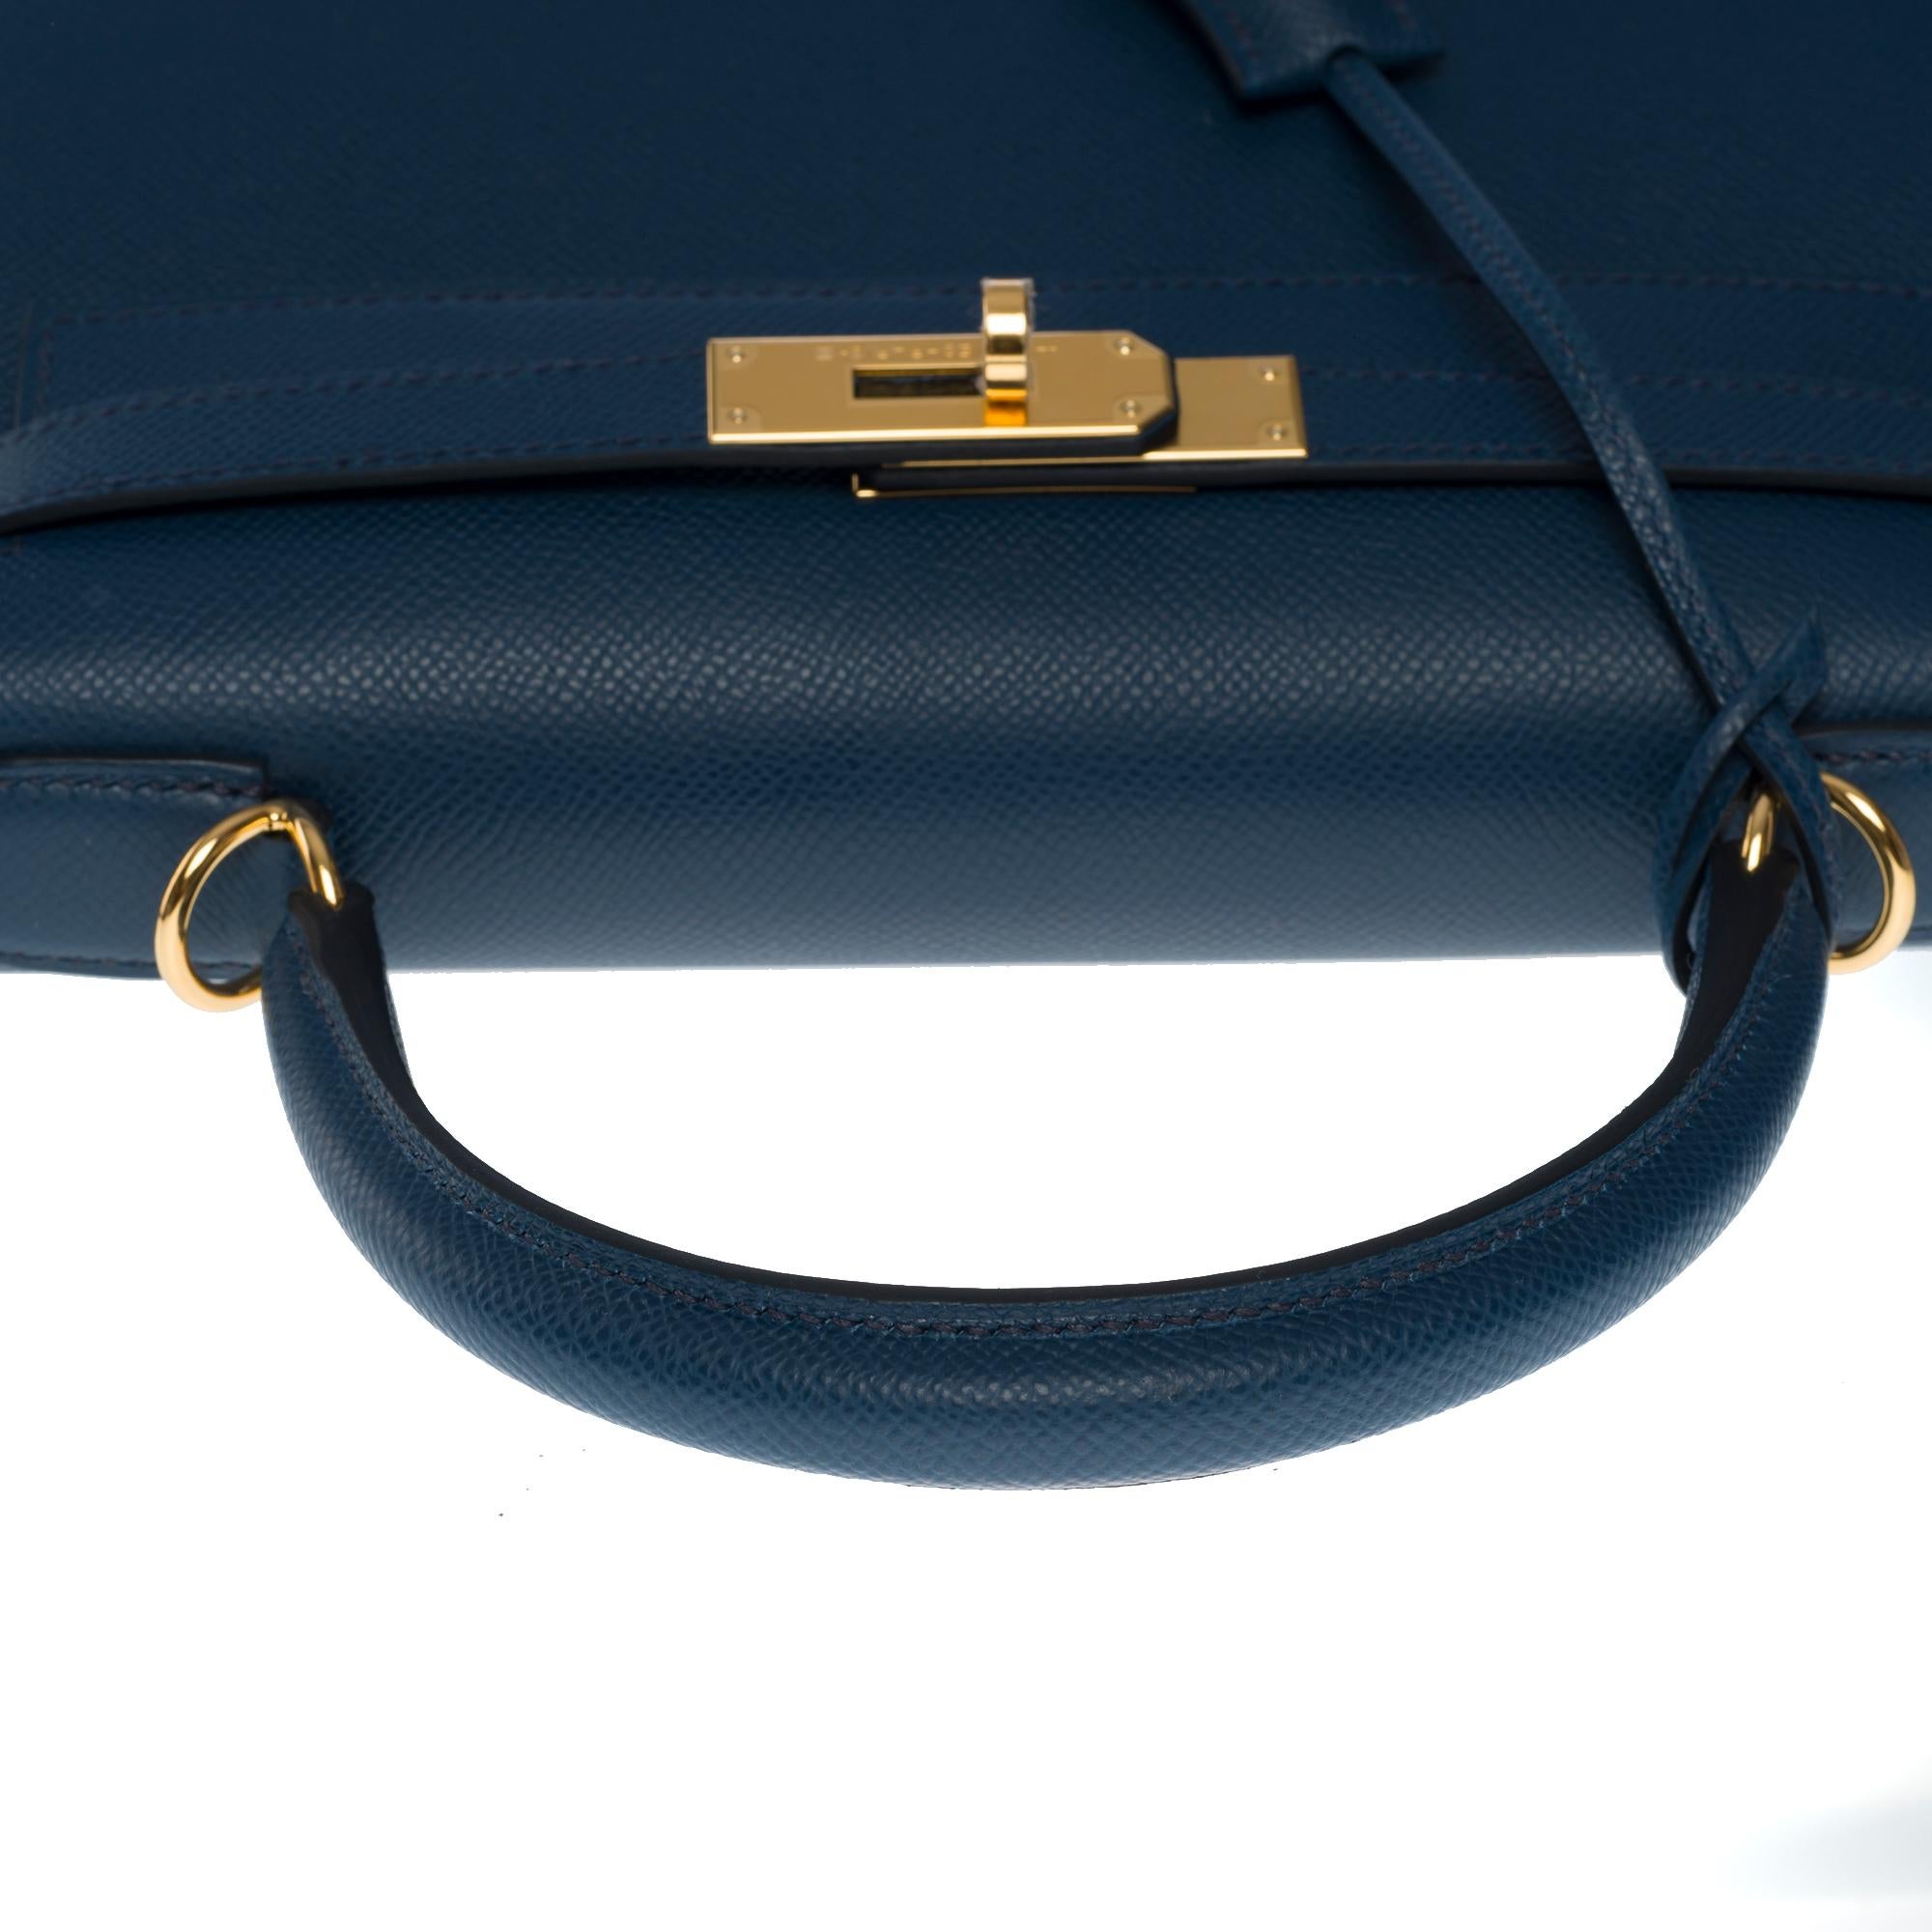 New Hermès Kelly 28 sellier handbag strap in Prussian blue Epsom leather, GHW 5